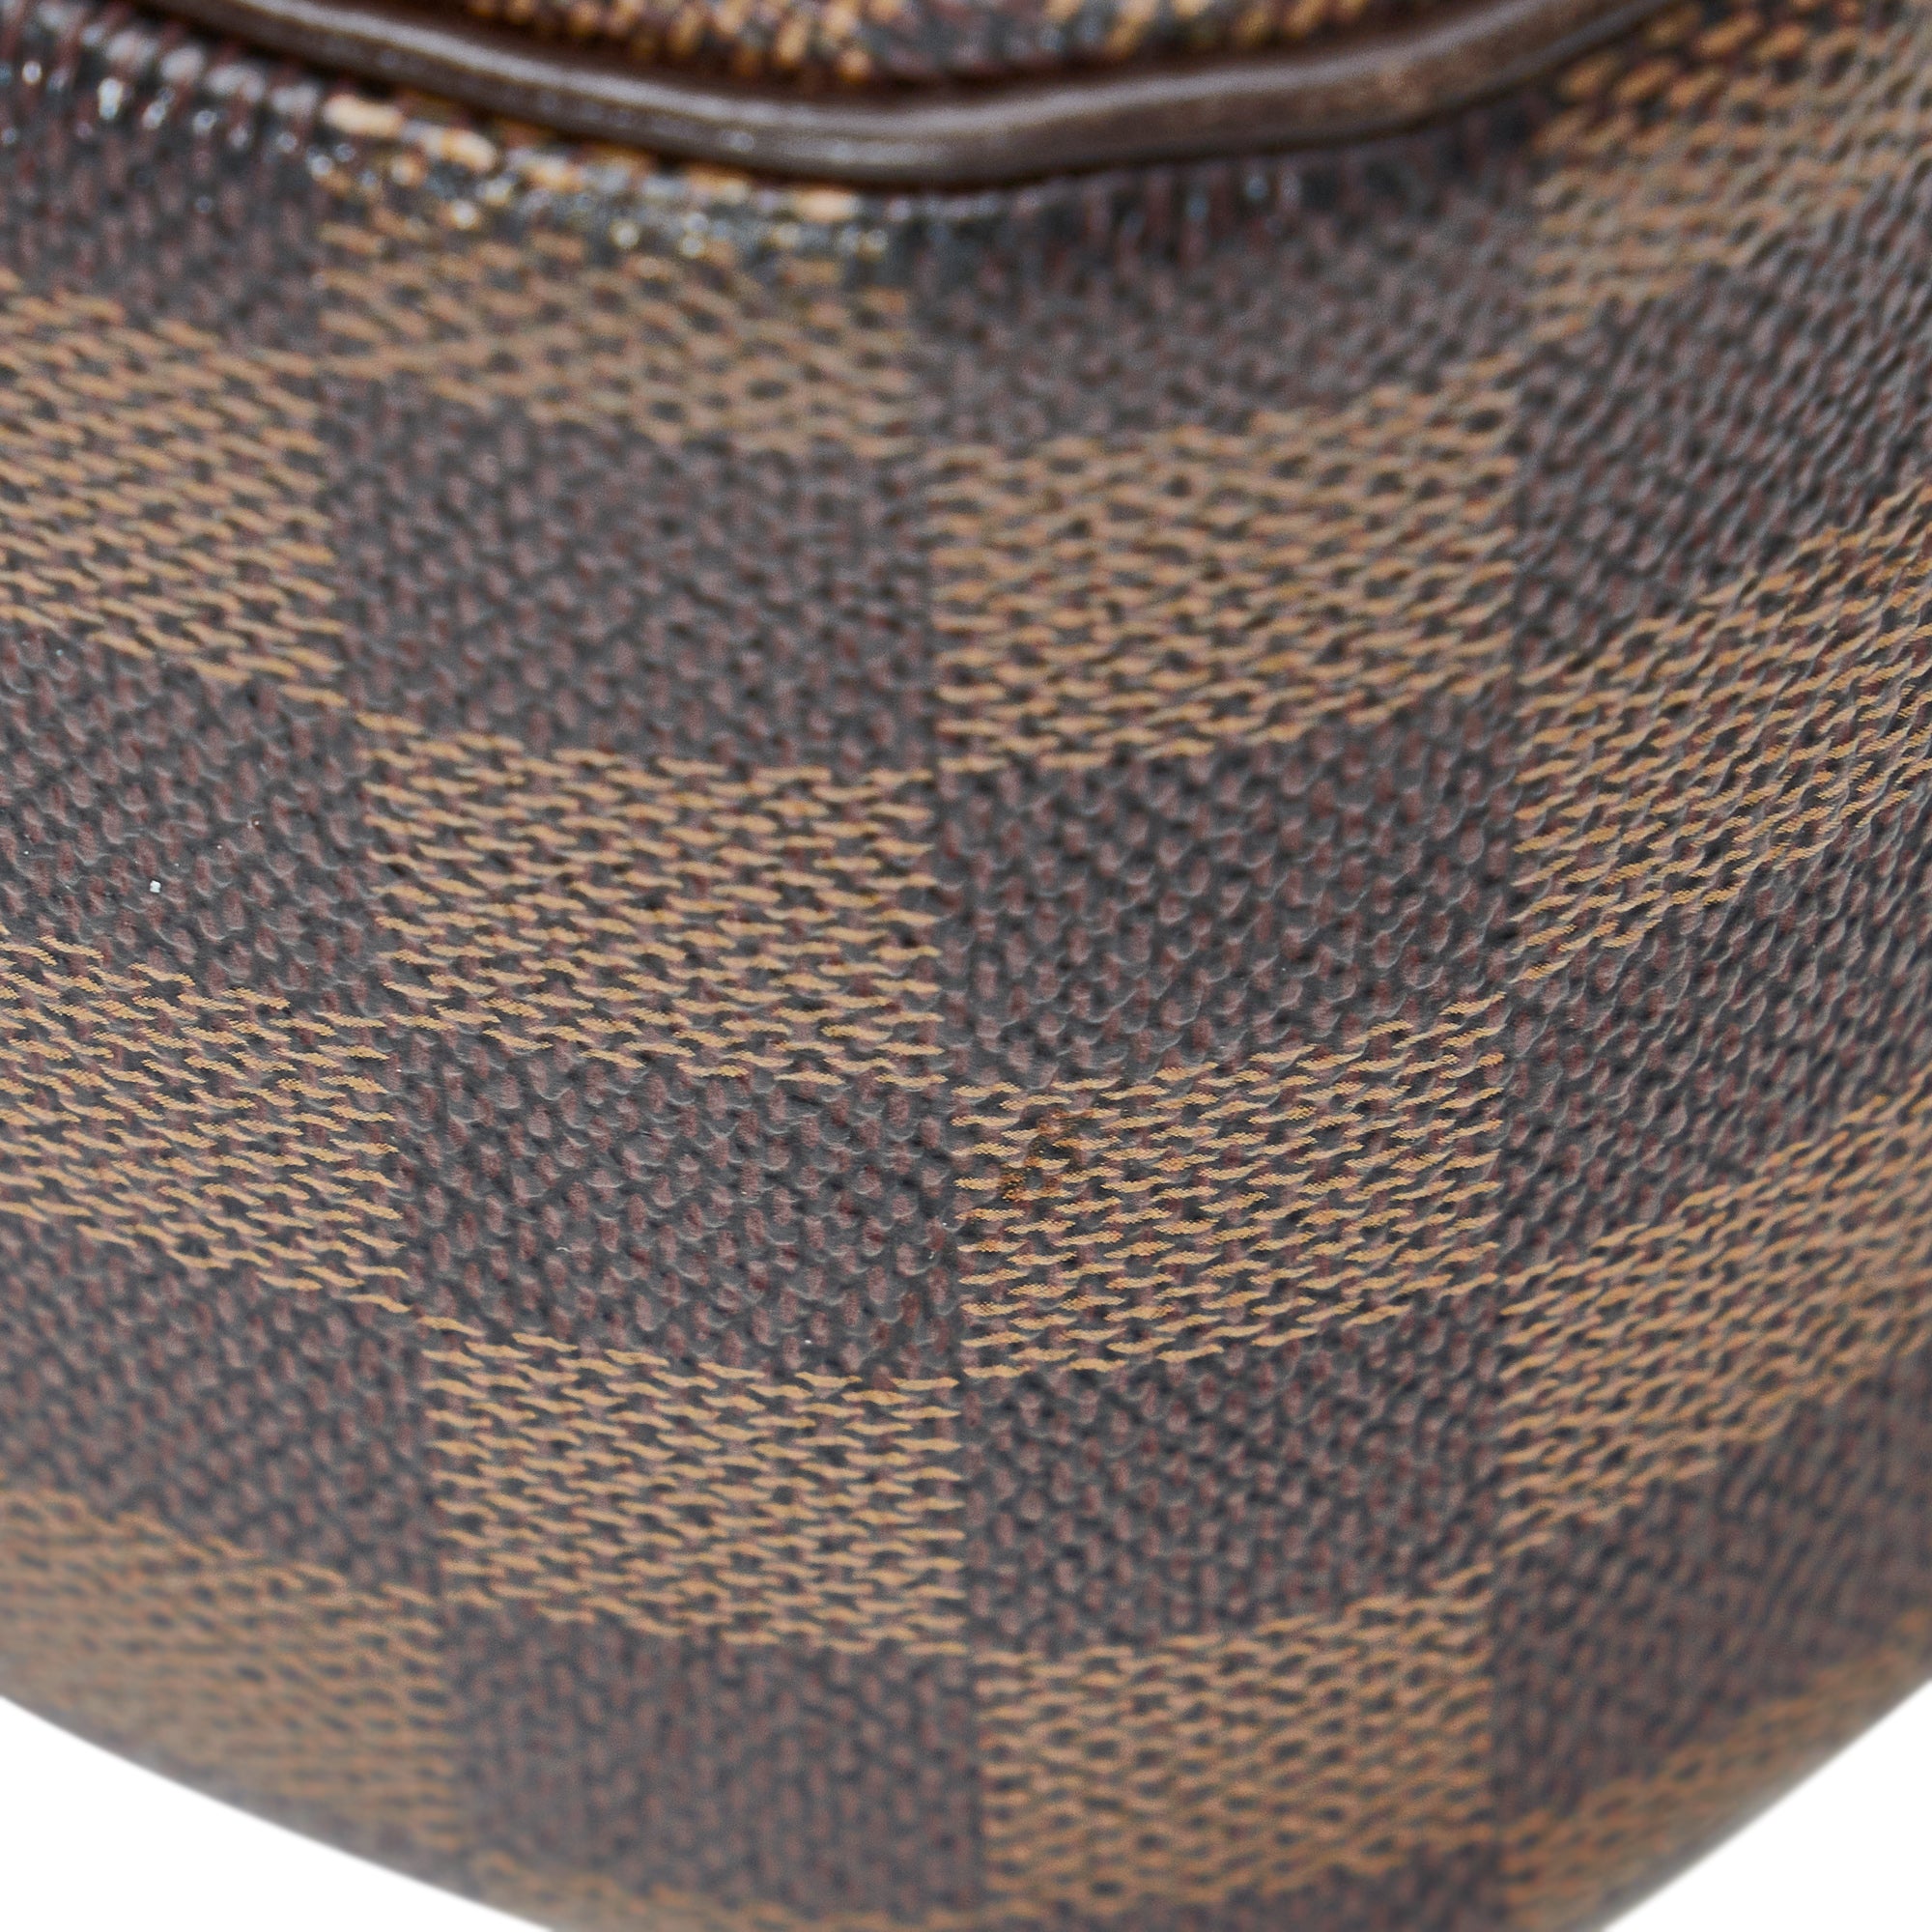 Louis Vuitton Damier Ebene Parioli - Brown Totes, Handbags - LOU700728